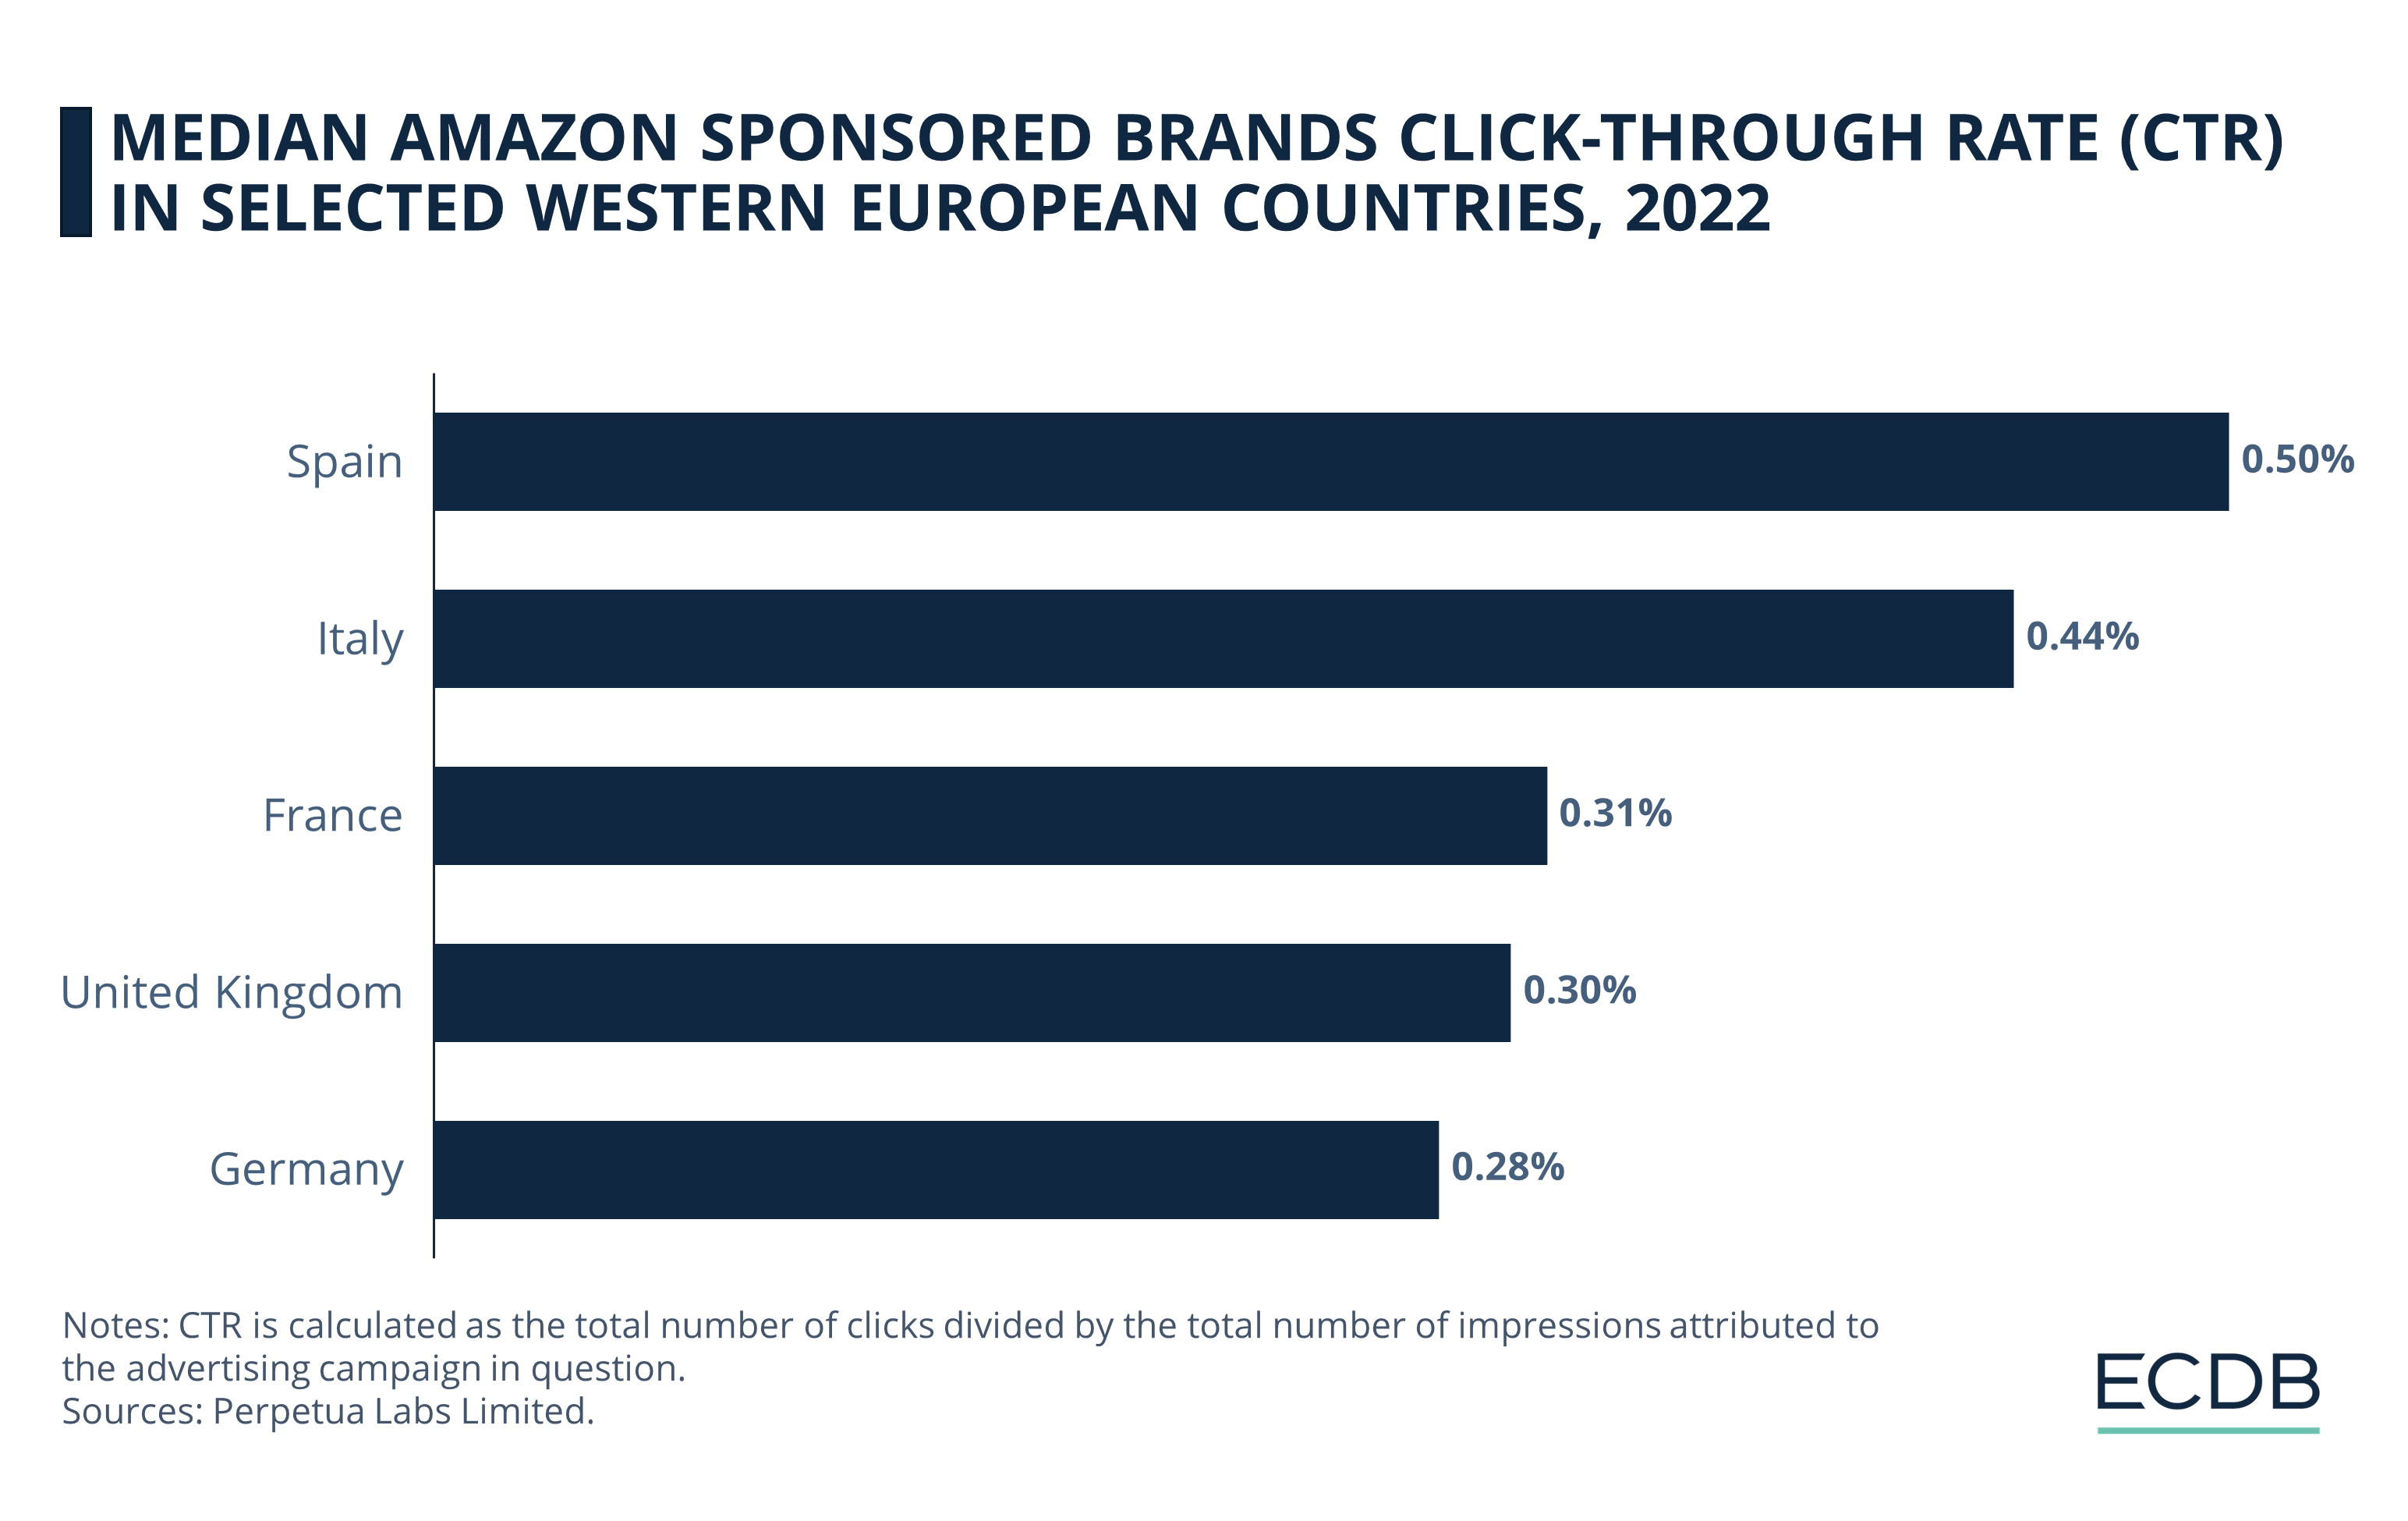 Amazon Median Sponsored Brands CTR in Selected Western European Countries, 2022